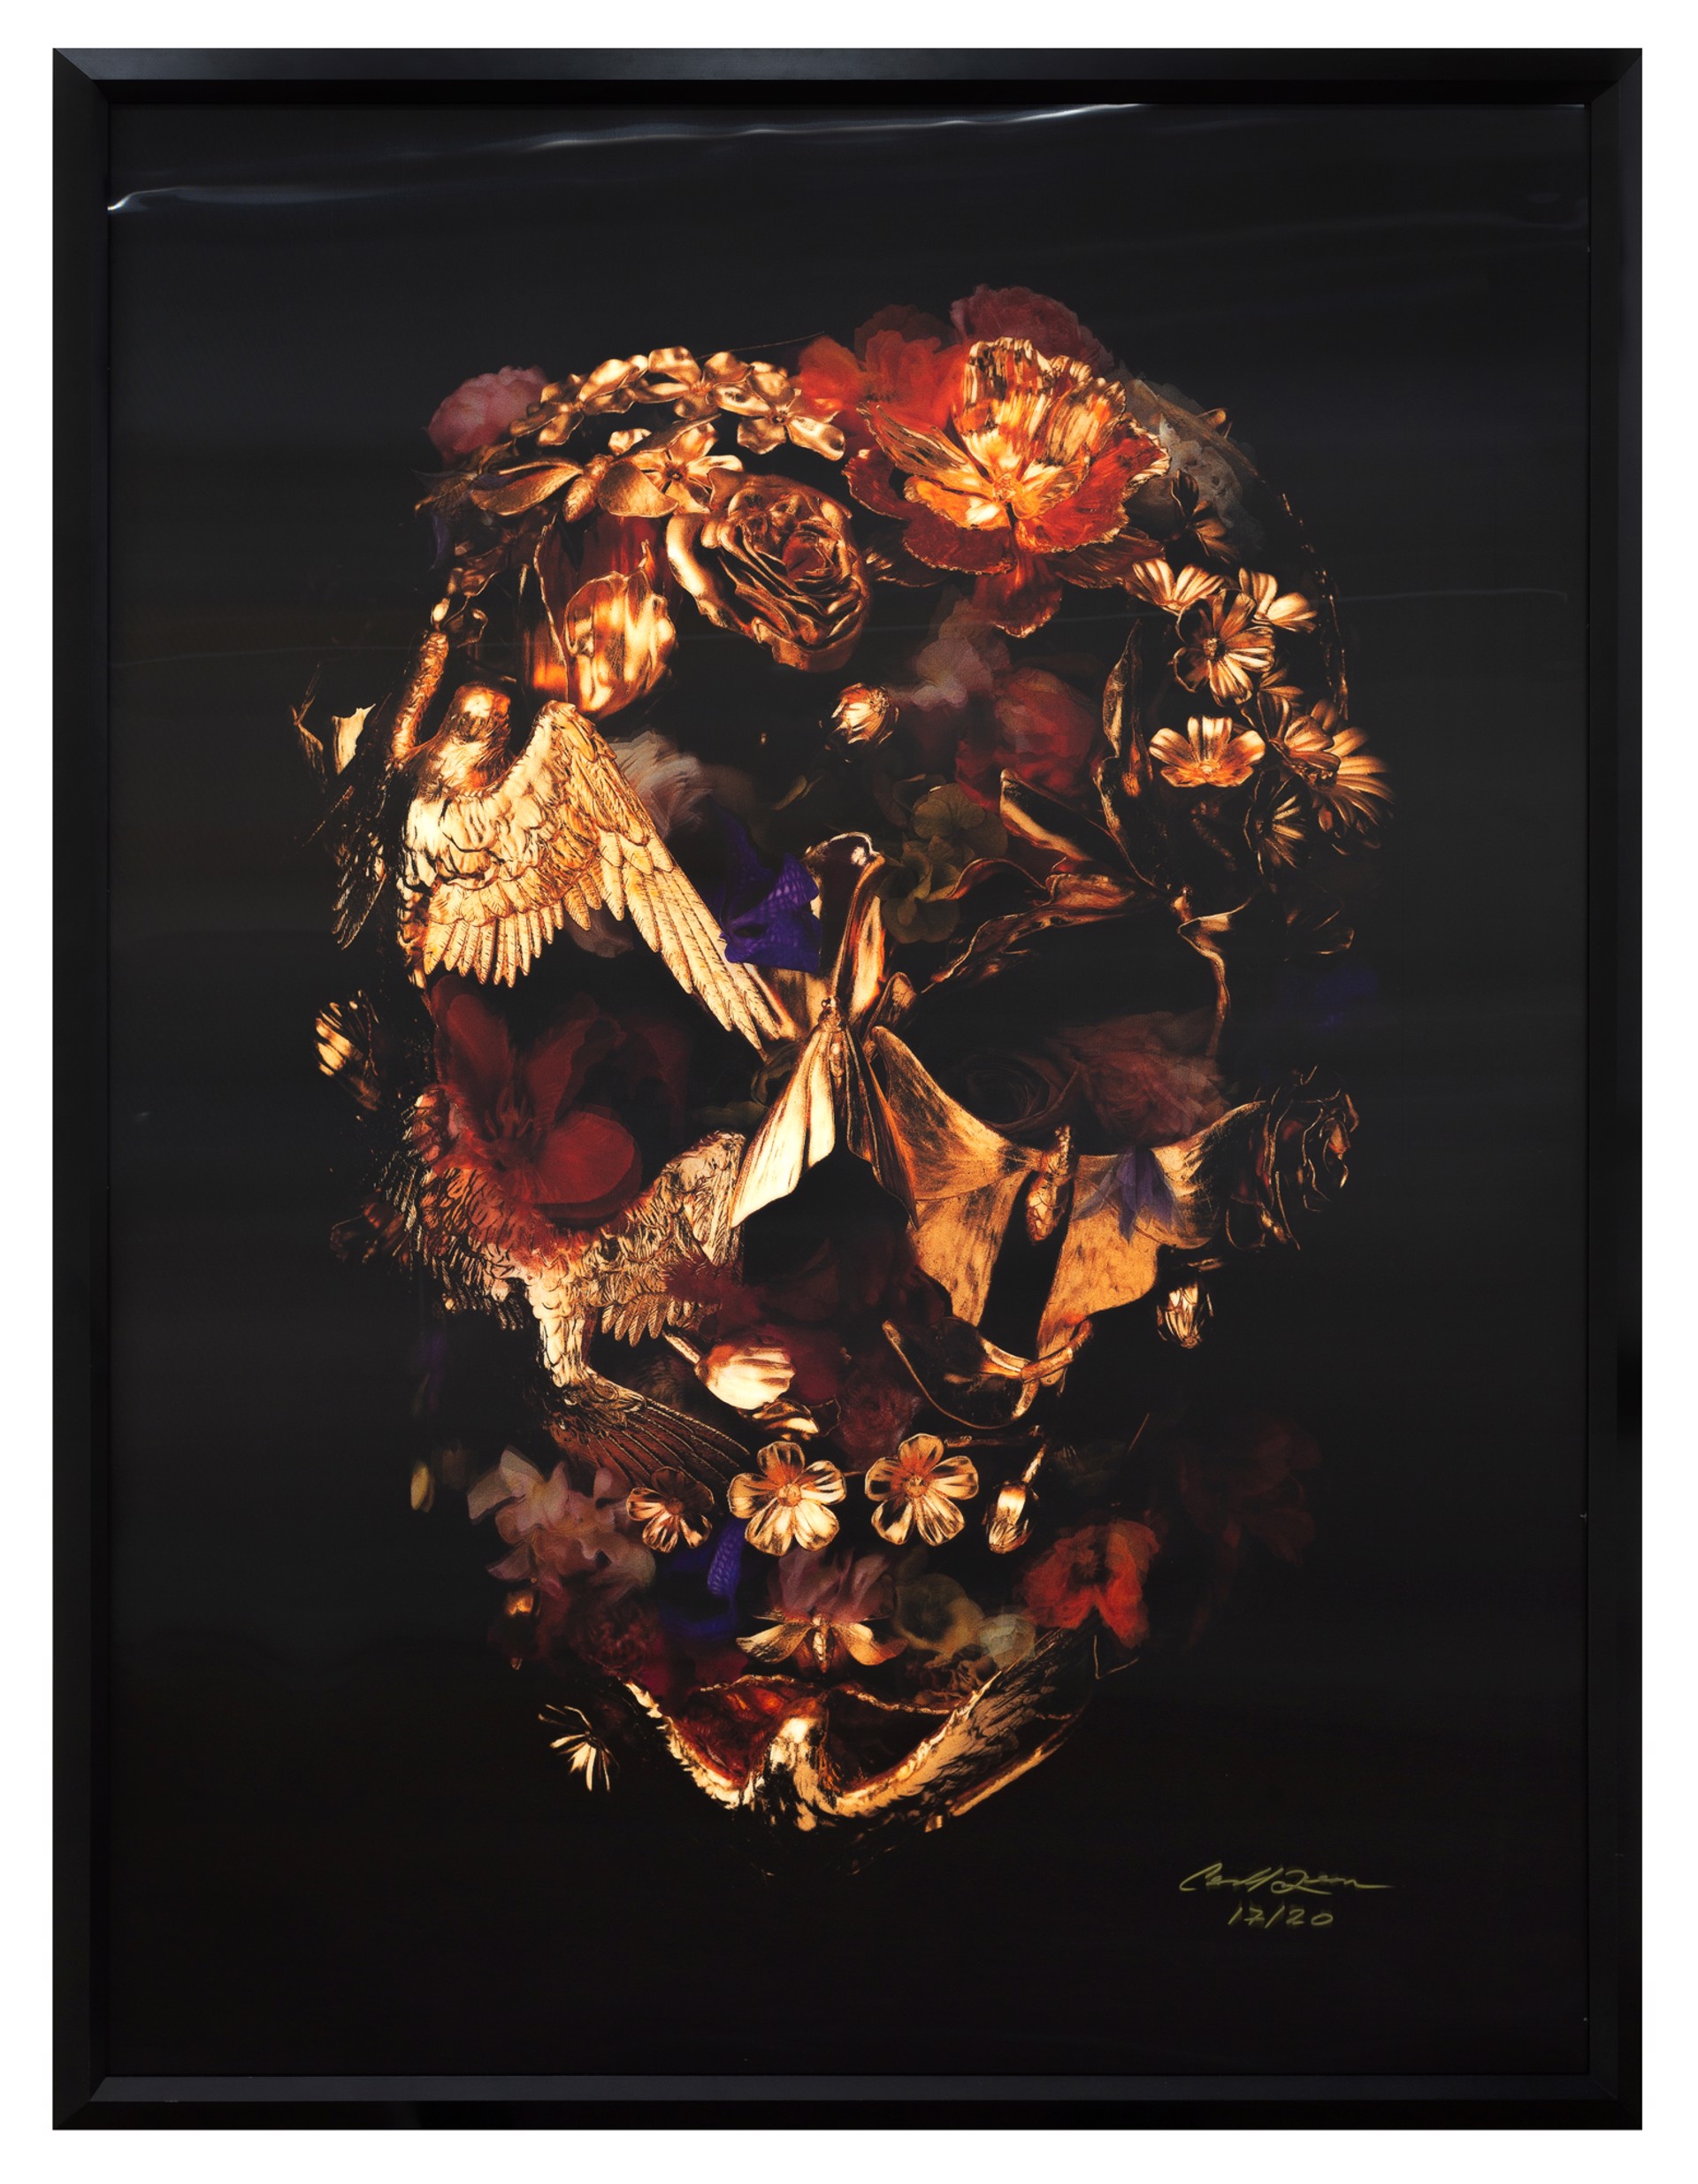 The Vanitas Skull by Gary James McQueen